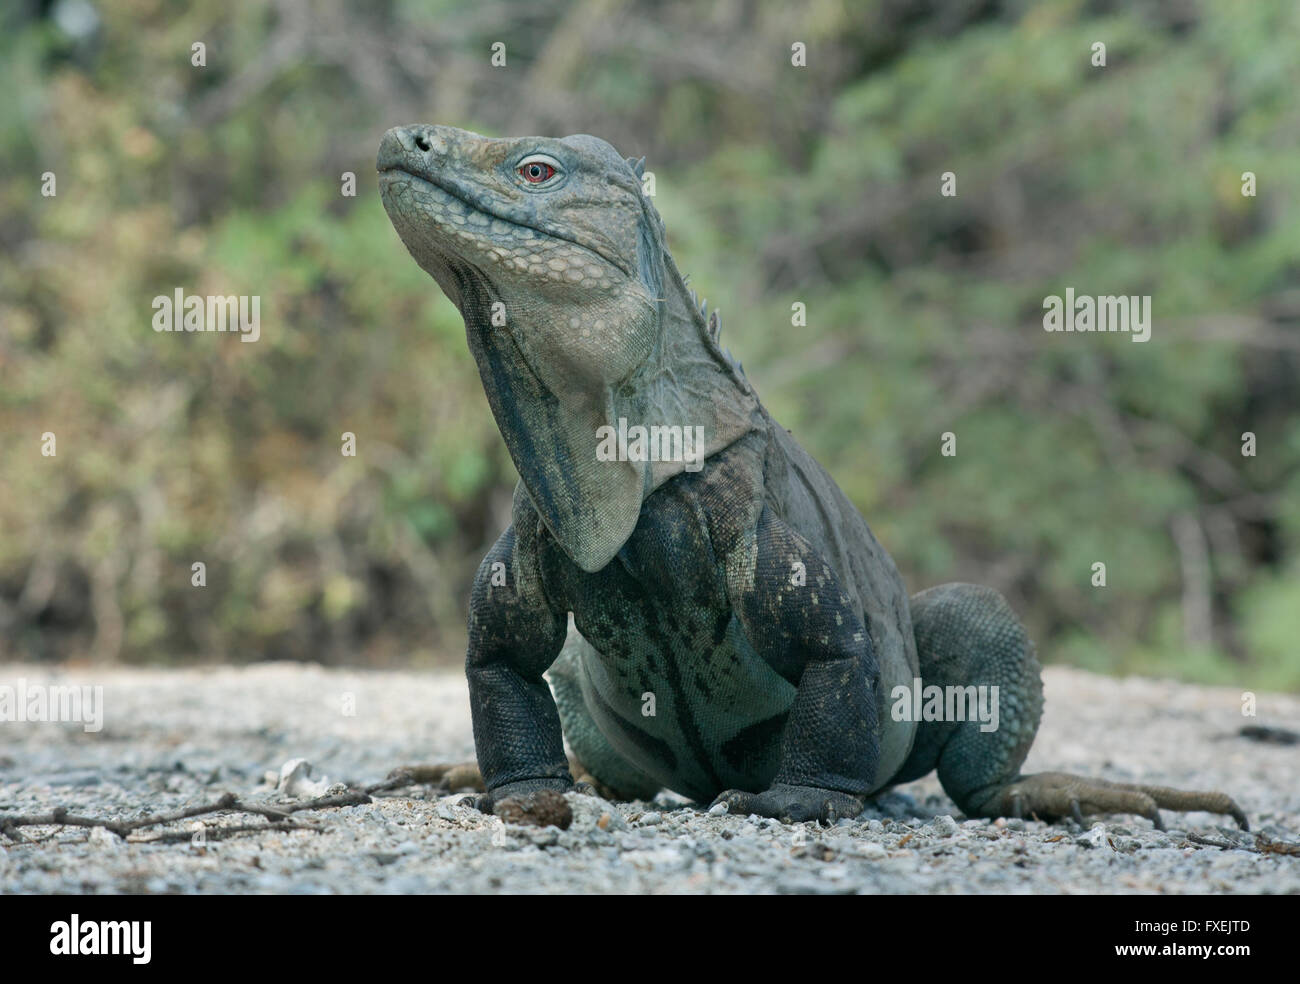 Entdecken oder Ricords Boden Leguan (Cyclura Ricordi) vom Aussterben bedroht, Lago Enriquillo, Dominikanische Republik Stockfoto